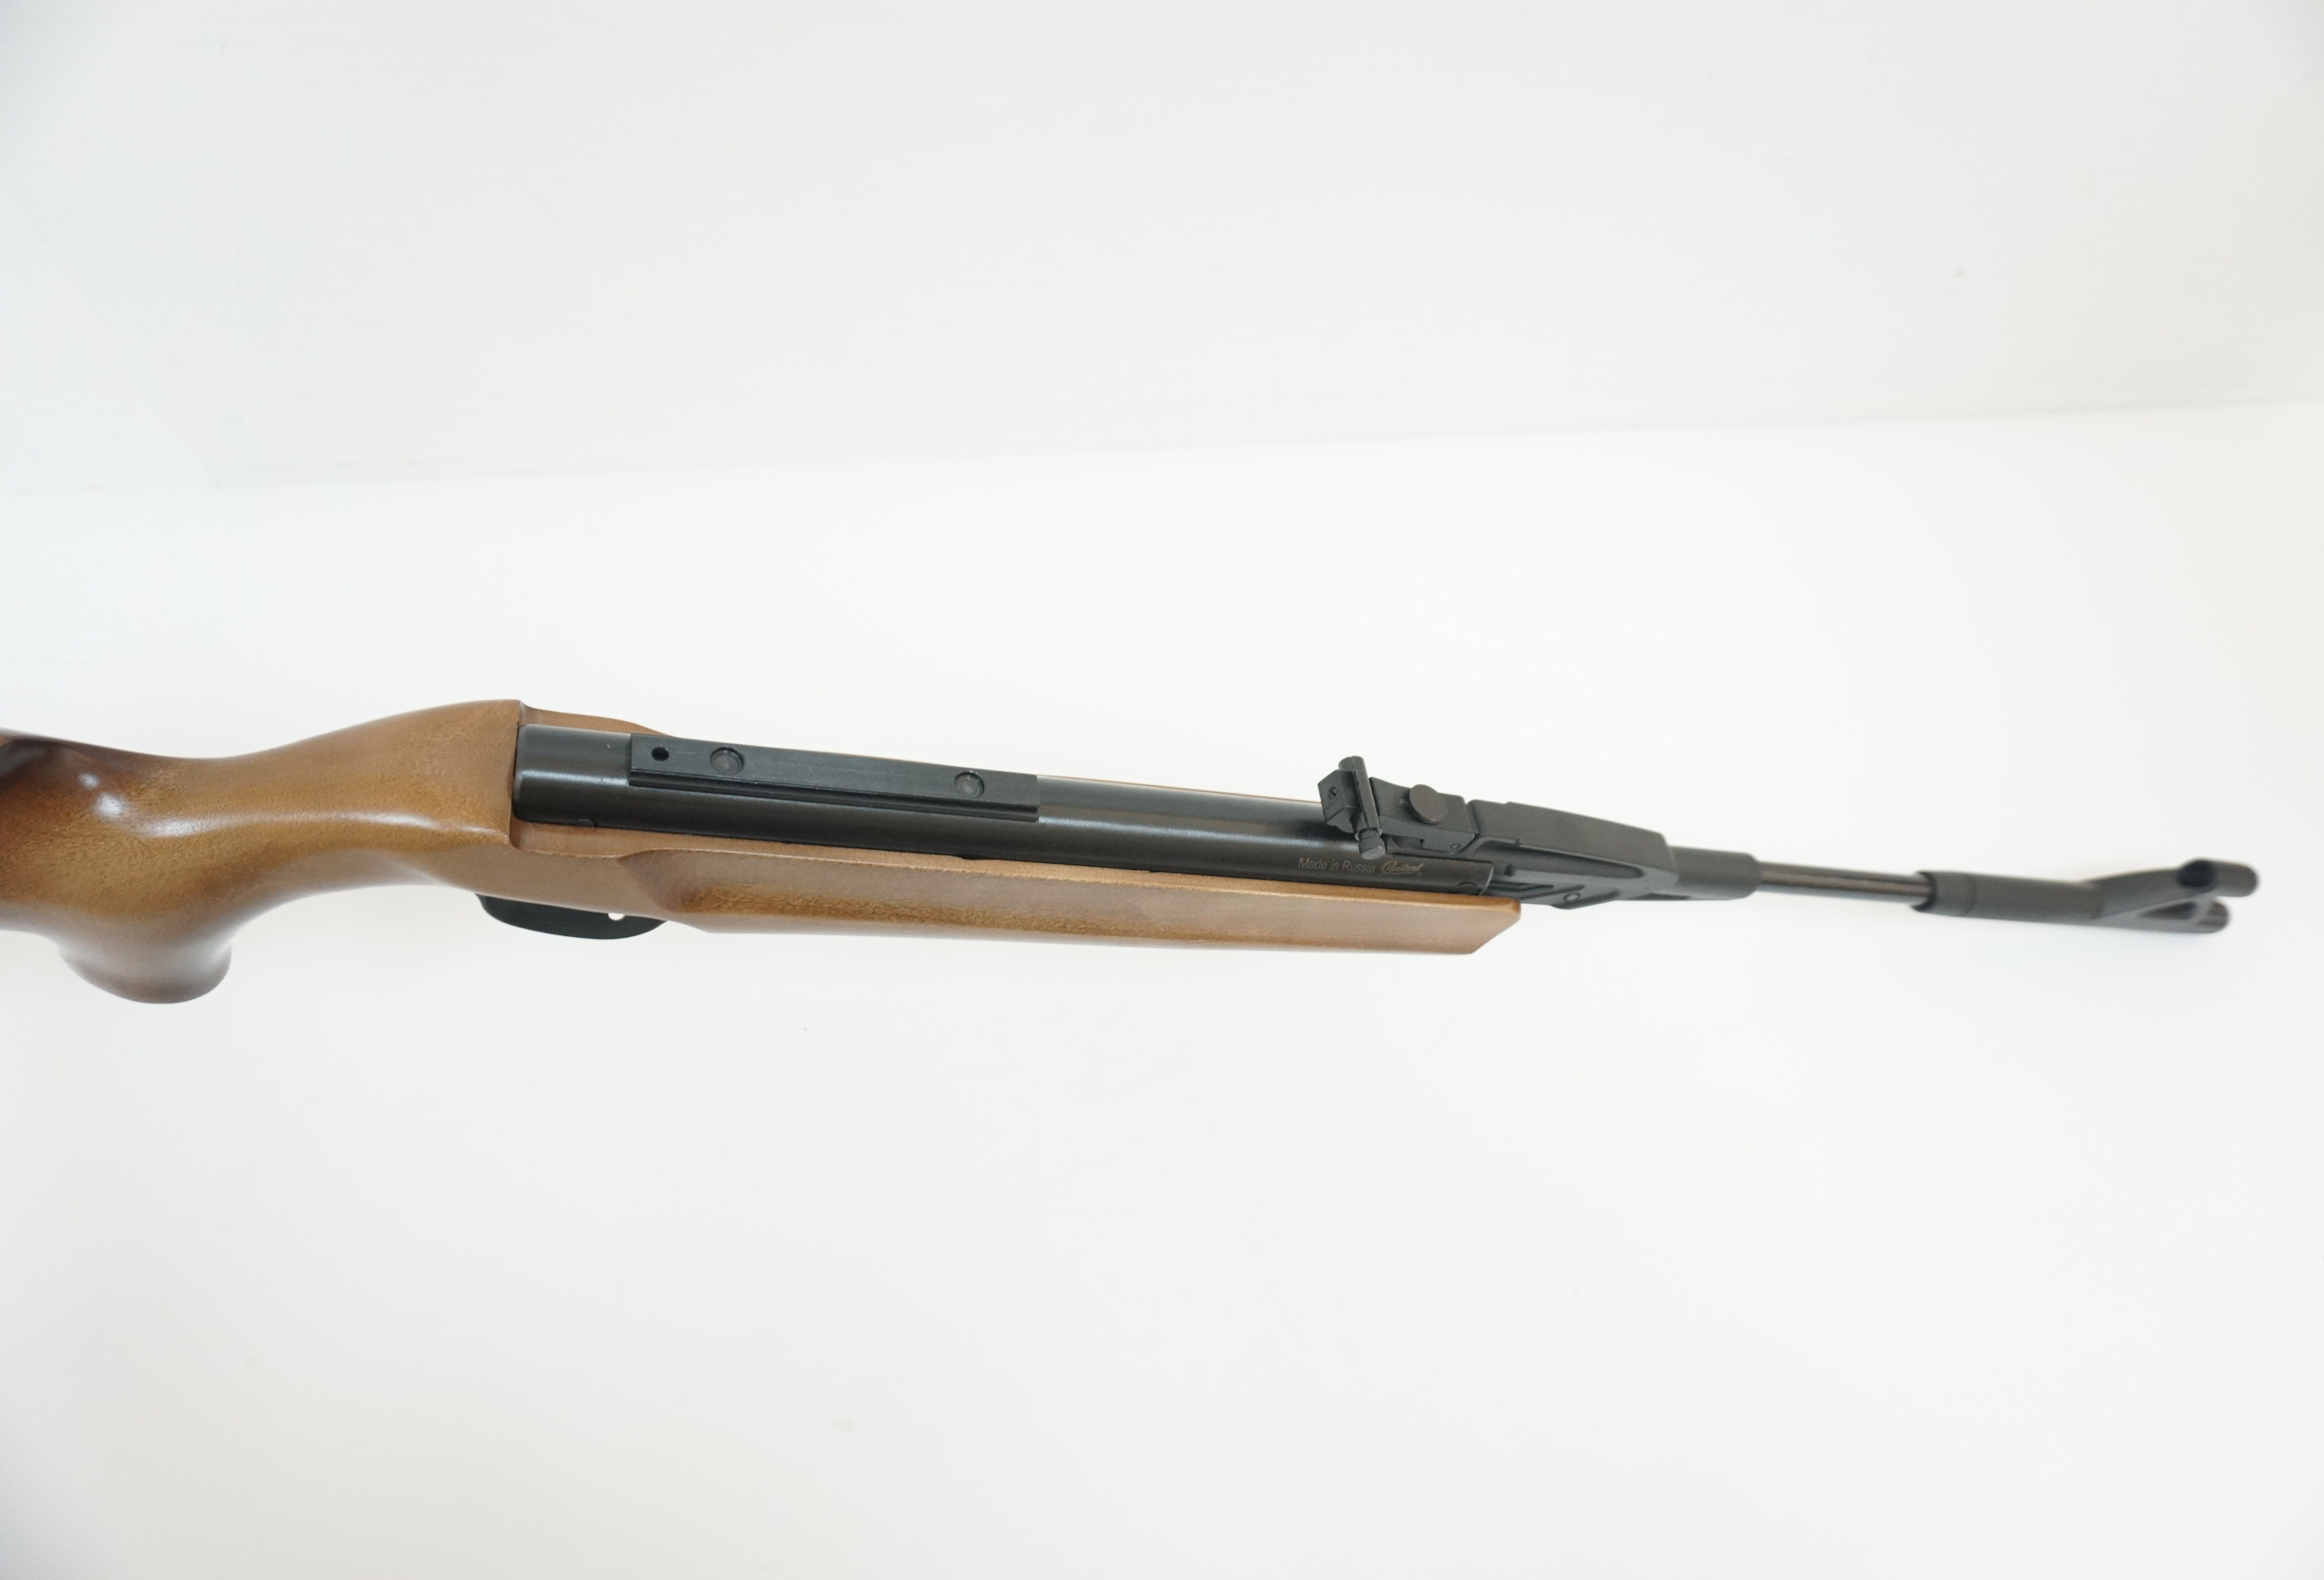 512 64 3. МР-512-64 винтовка пневматическая. Воздушка Baikal MP-512. Mr 512 винтовка. Пневматическая винтовка МР-512-30 (дерево, обновл.) 6950р.